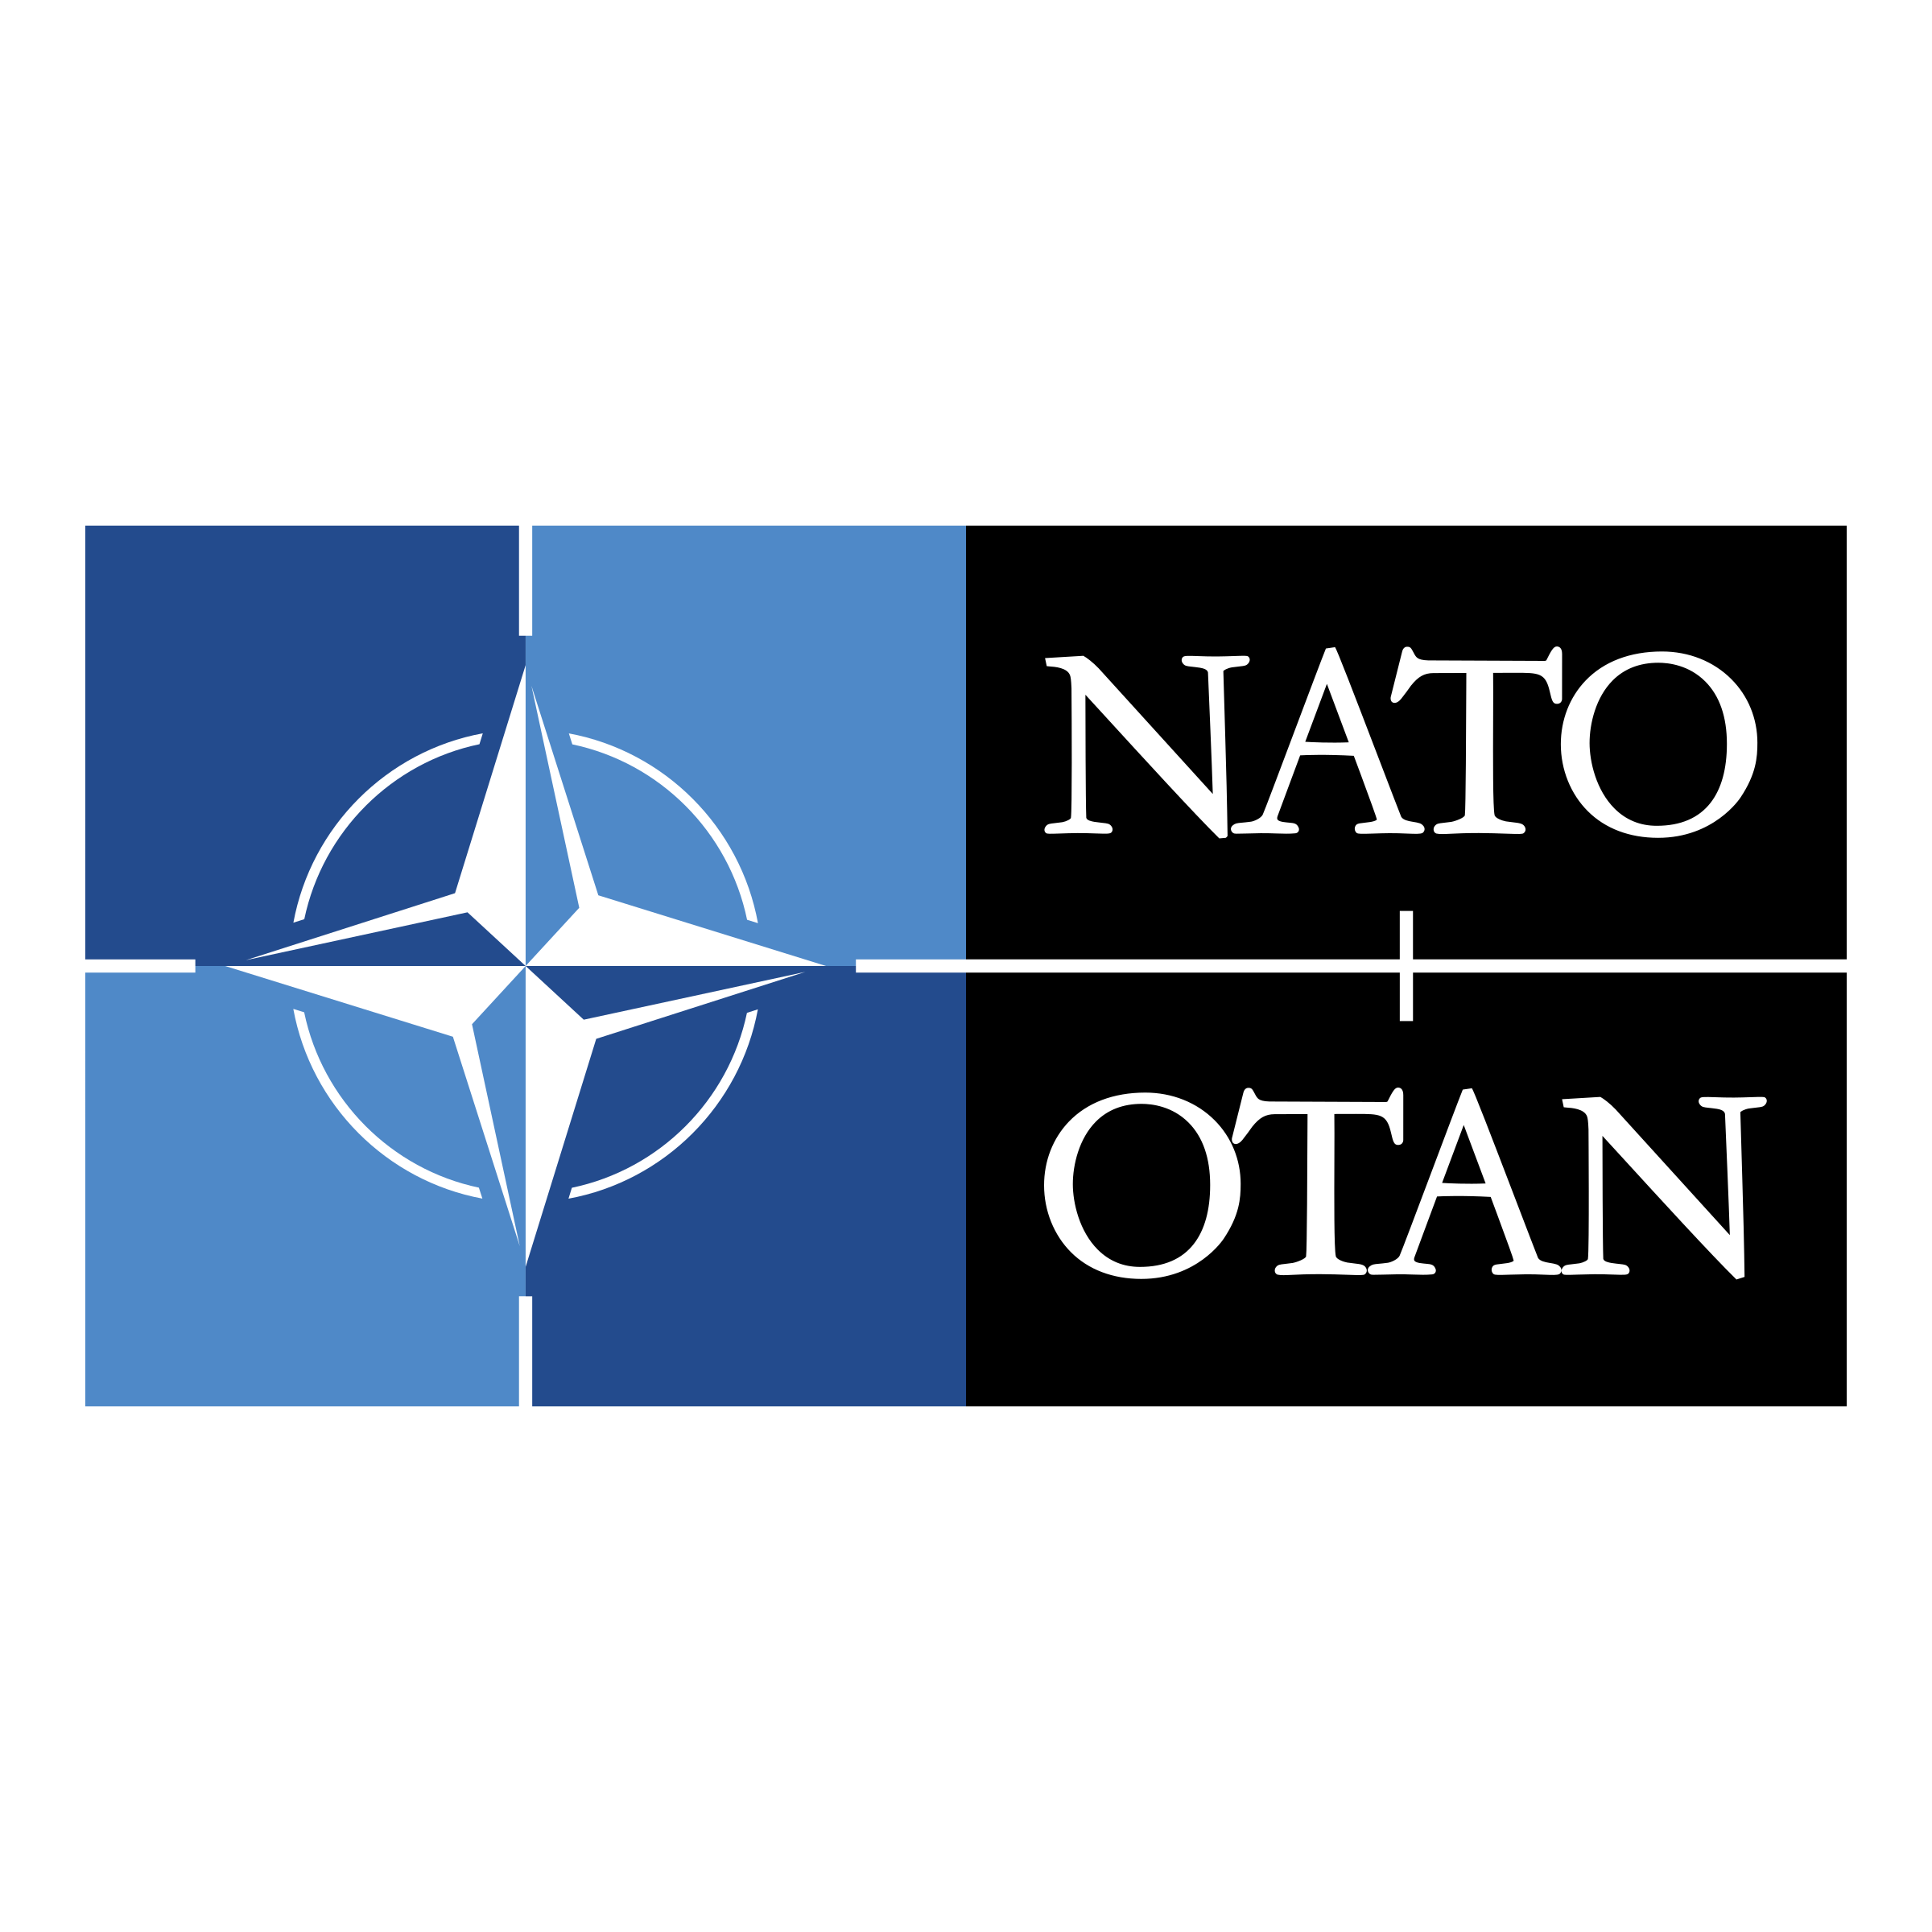 NATO Logo PNG Transparent & SVG Vector - Freebie Supply